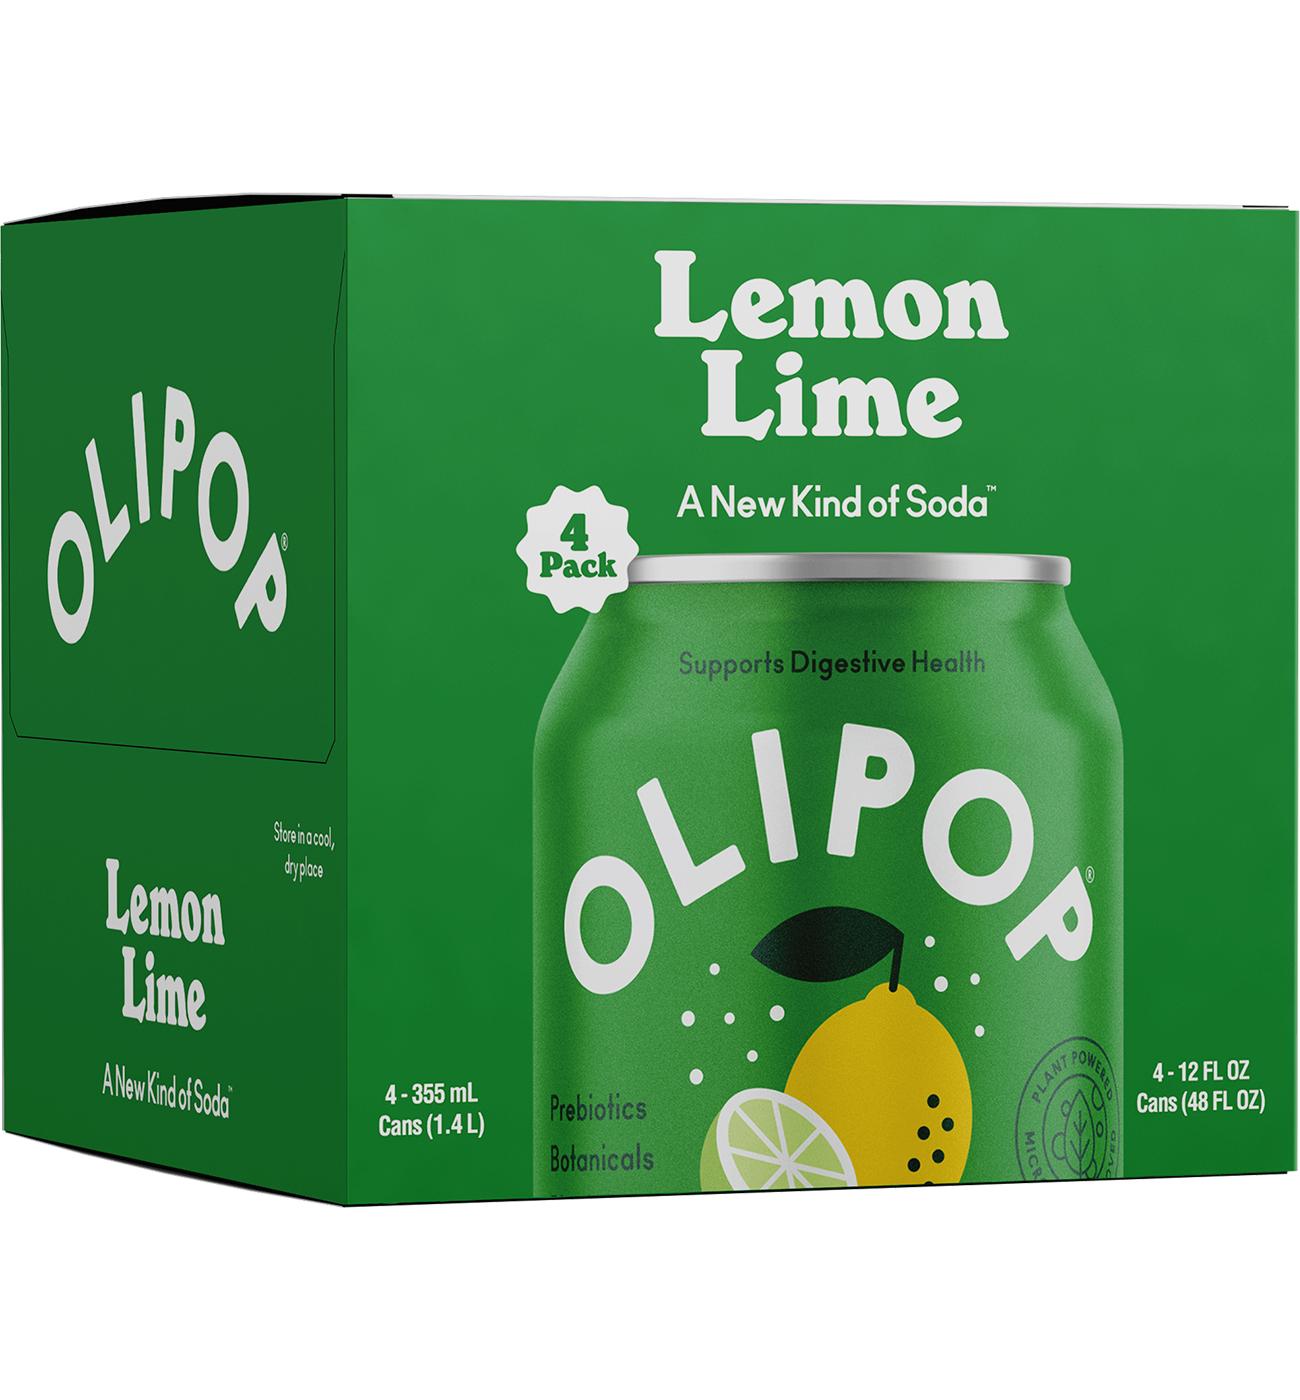 Olipop Prebiotic Lemon Lime Soda 4 pk Cans; image 1 of 2